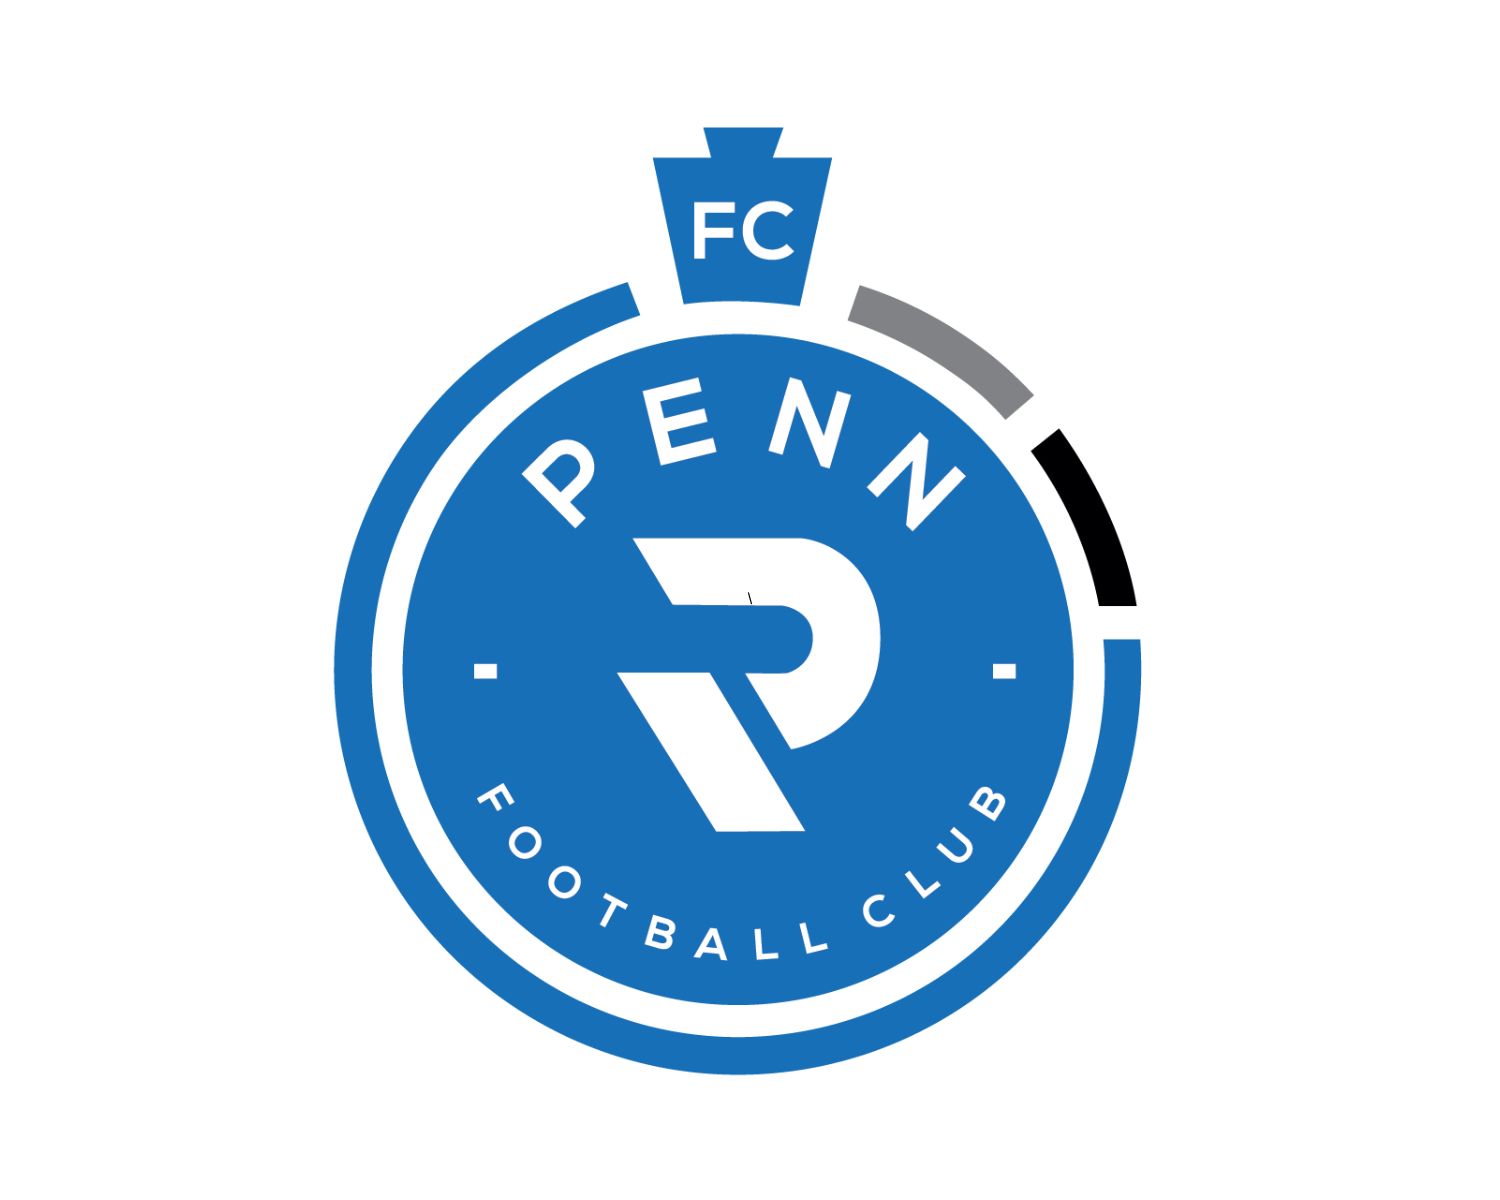 penn-fc-13-football-club-facts